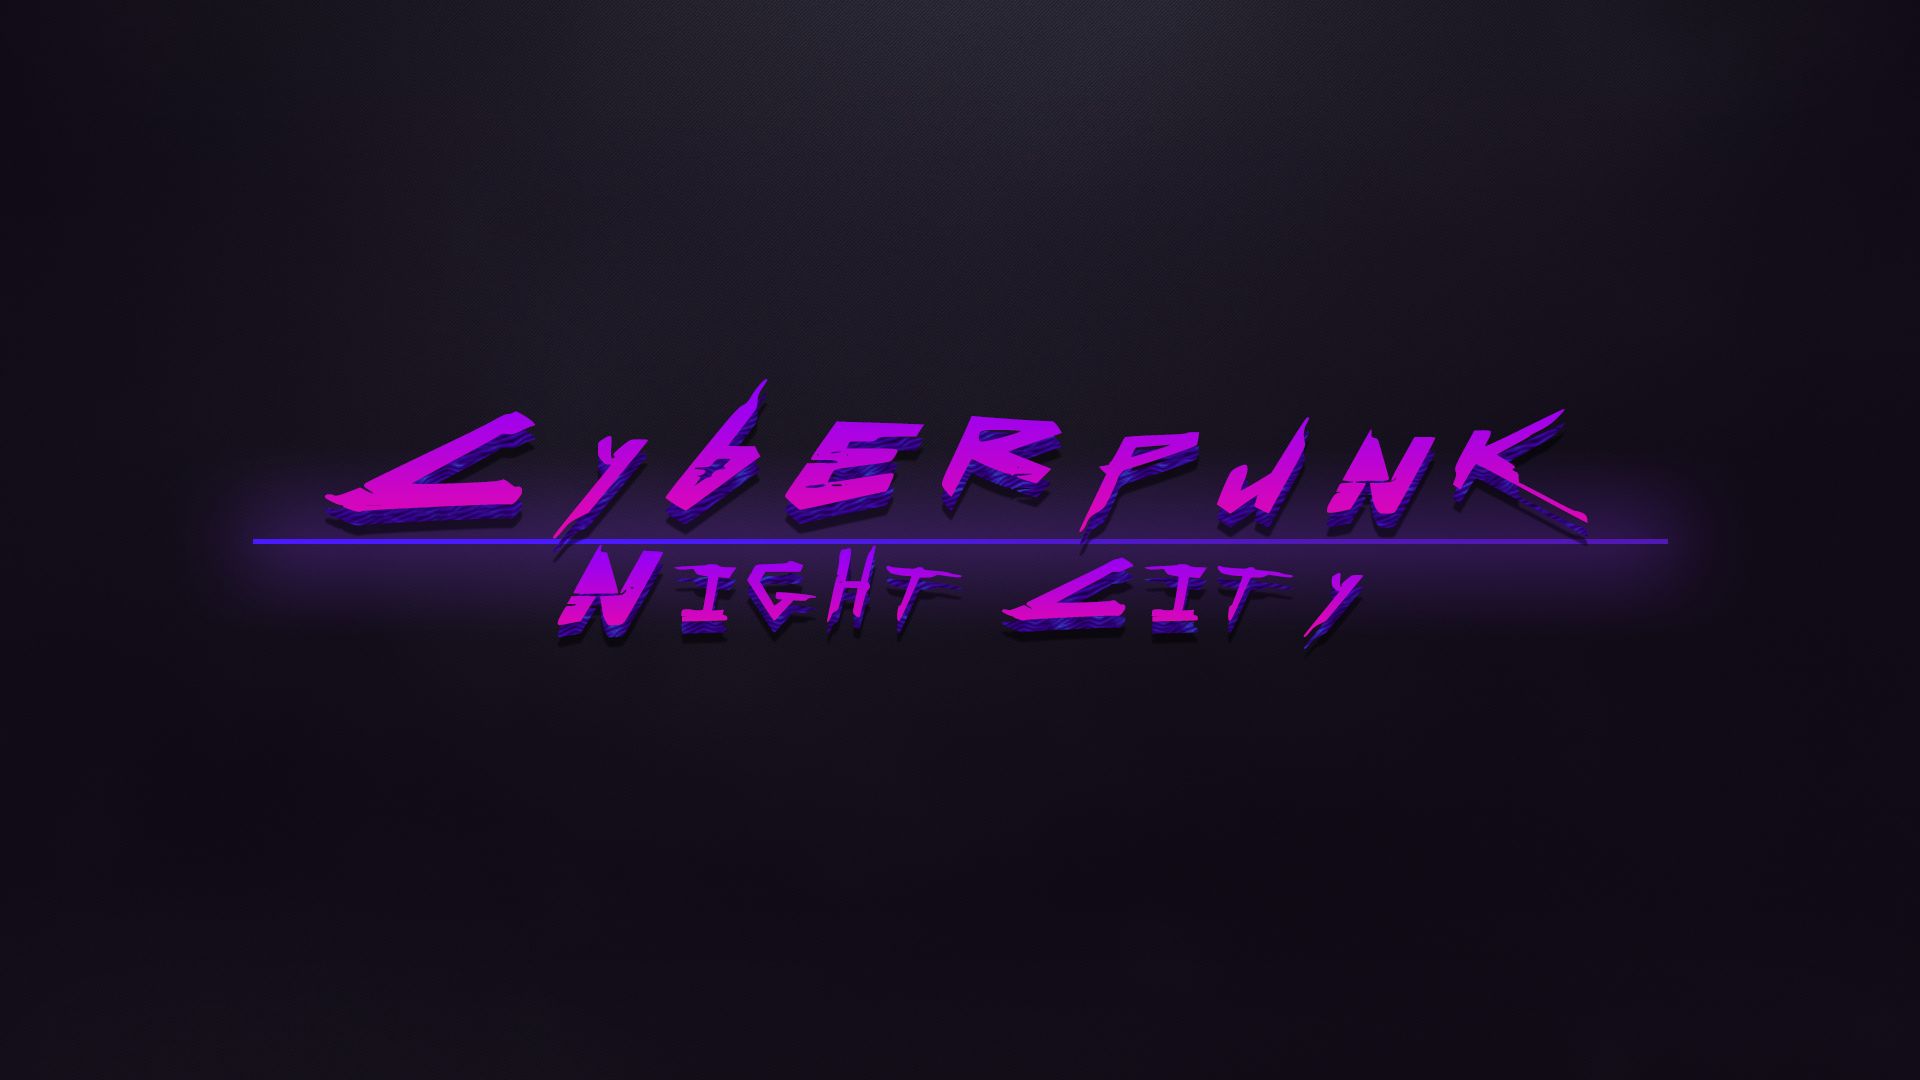 Baixar papel de parede para celular de Videogame, Cyberpunk 2077 gratuito.